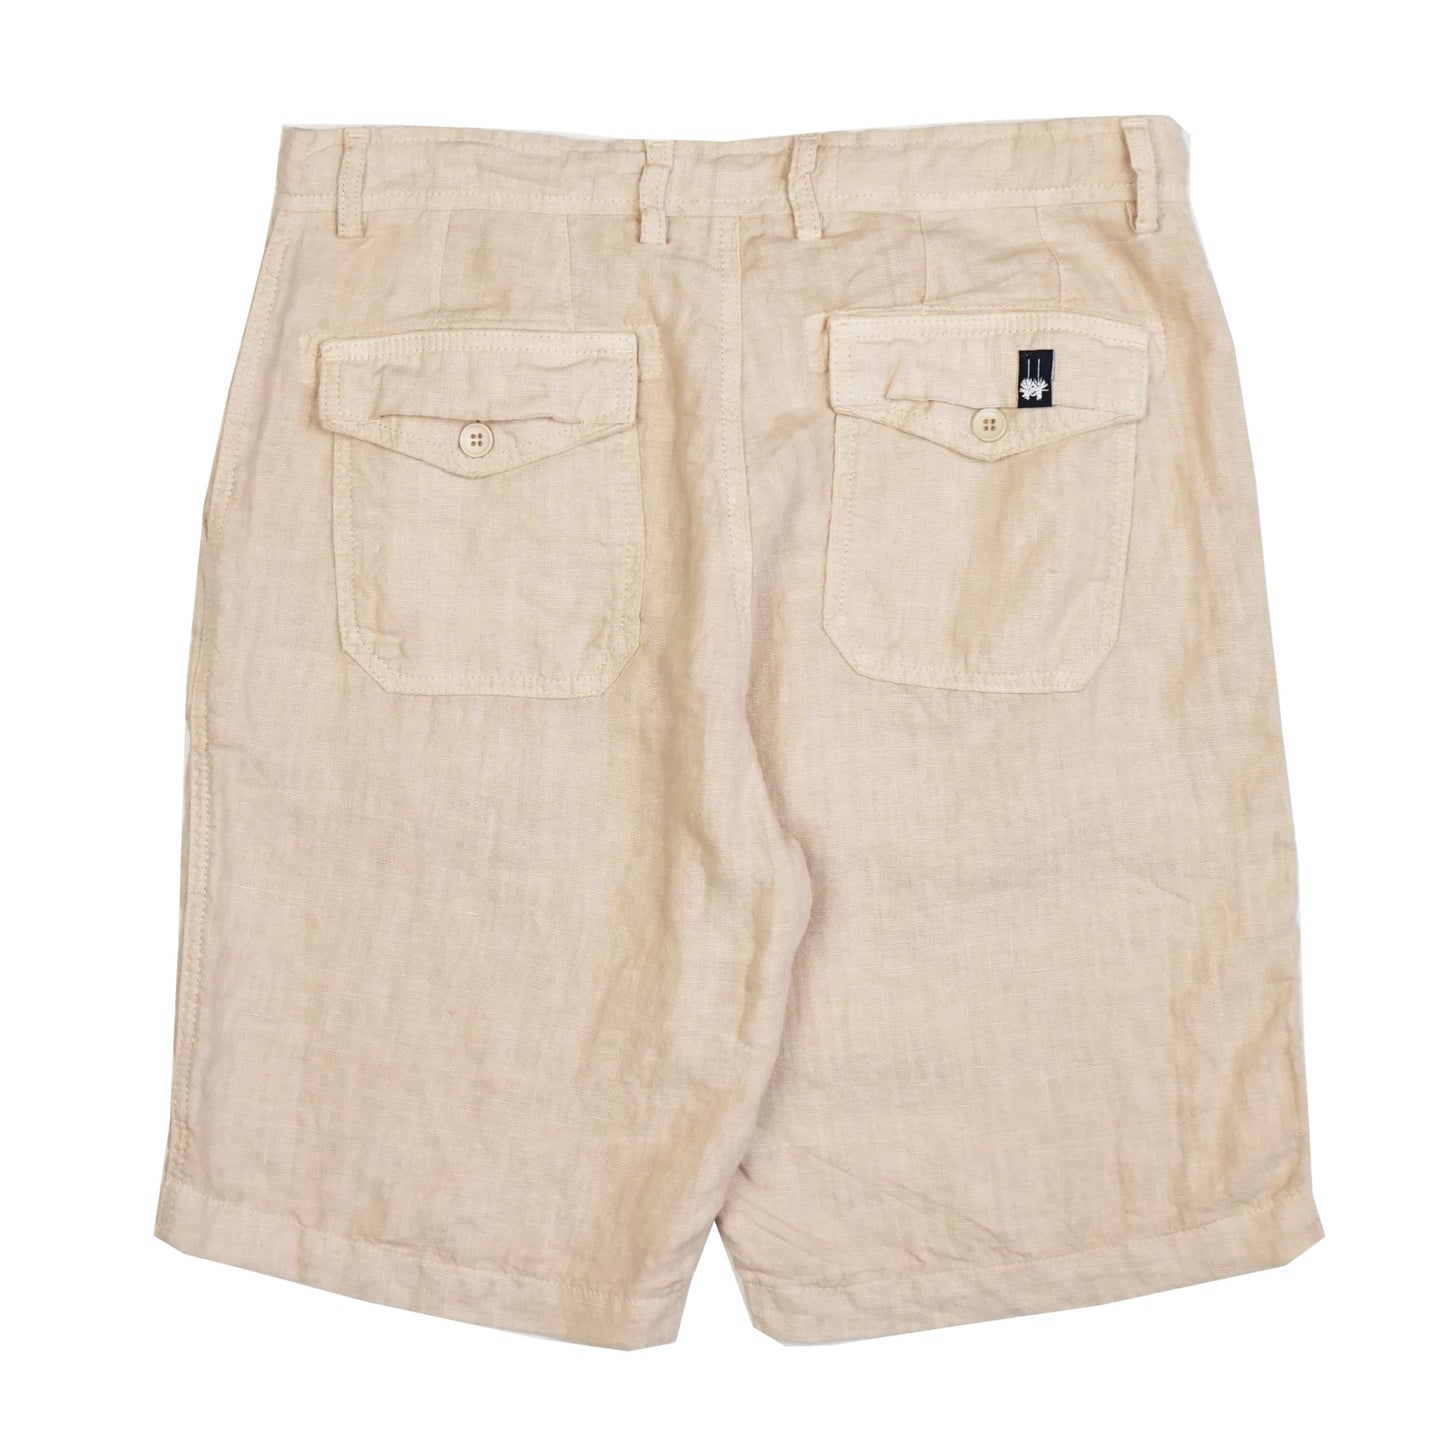 Palm Springs Beige Linen Shorts